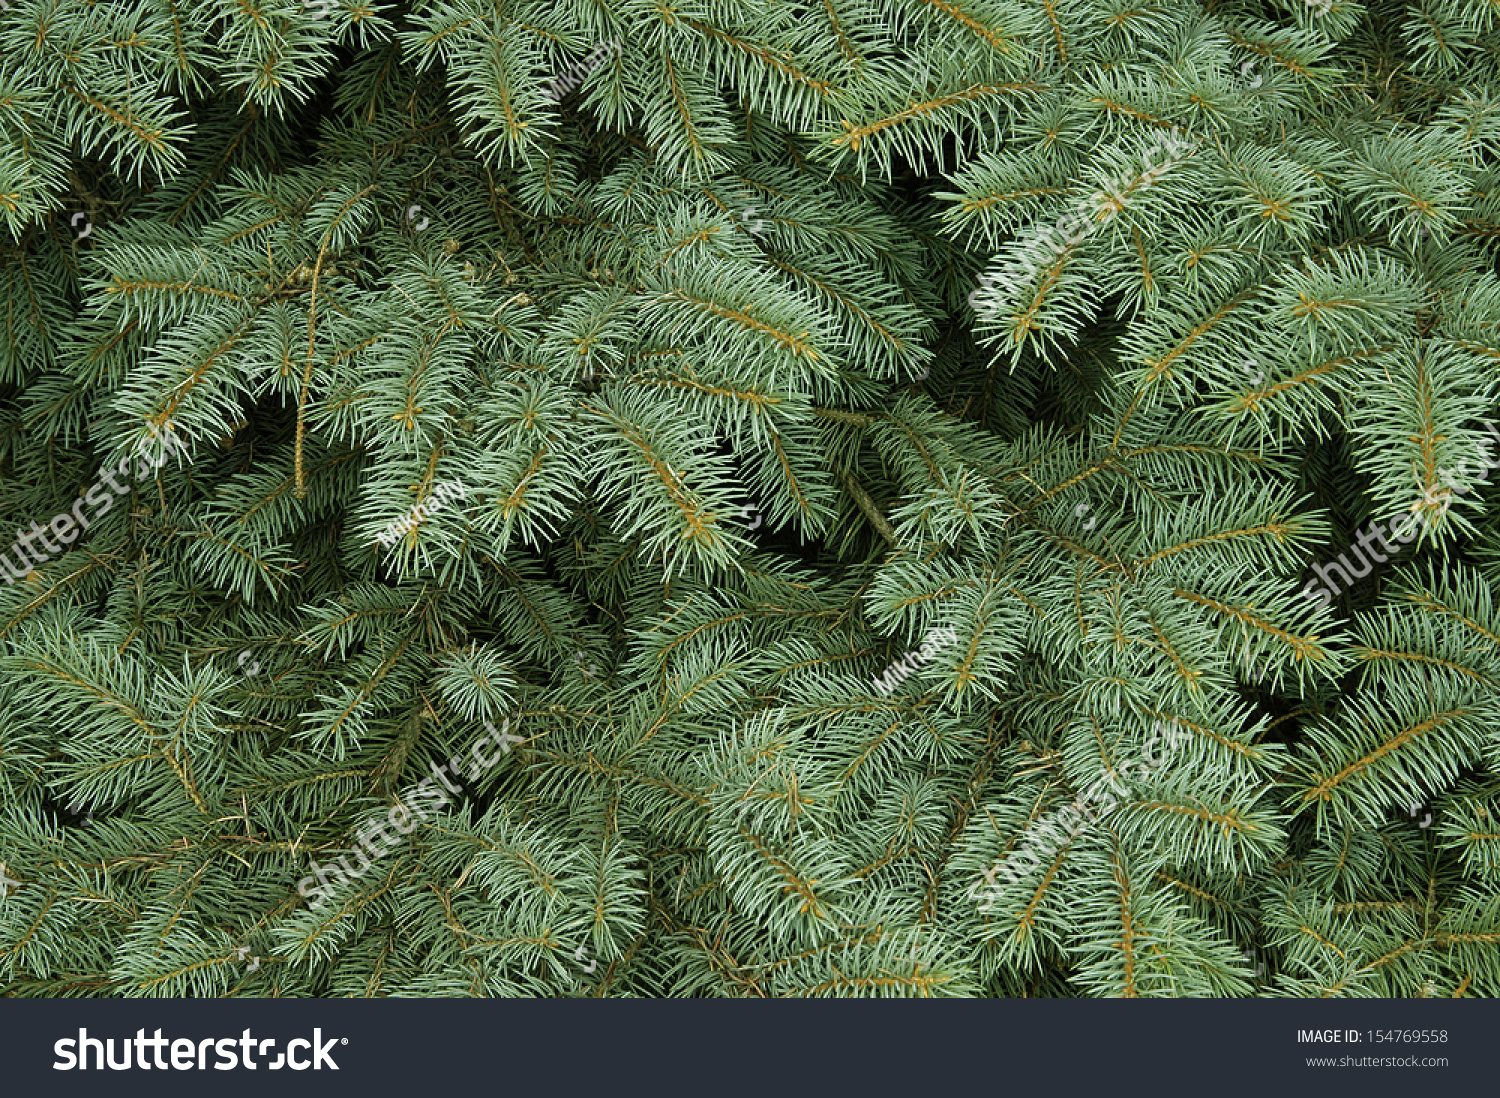 Pinus елка пихта зелено/голубая 2.7